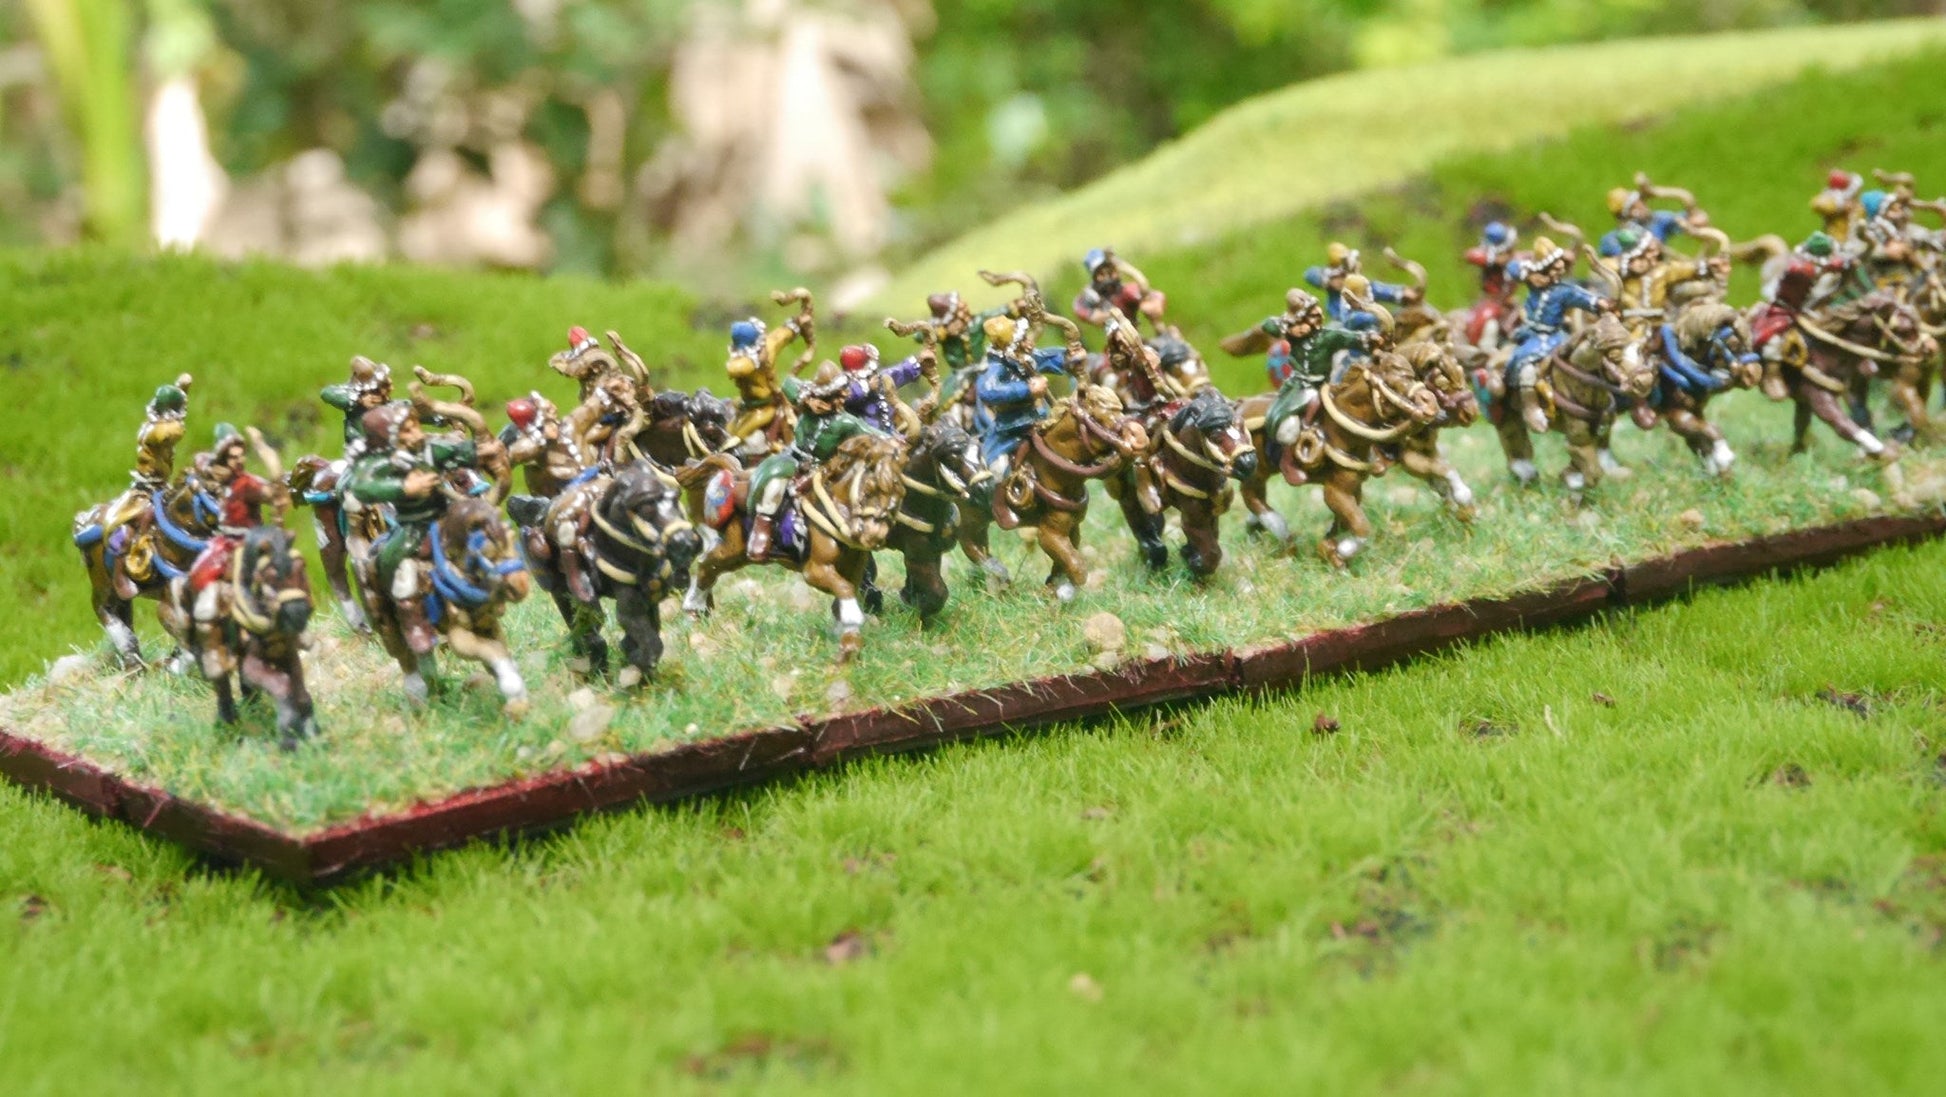 Mortem et Gloriam Hunnic Pacto Starter Army Miniatures Plastic Soldier 